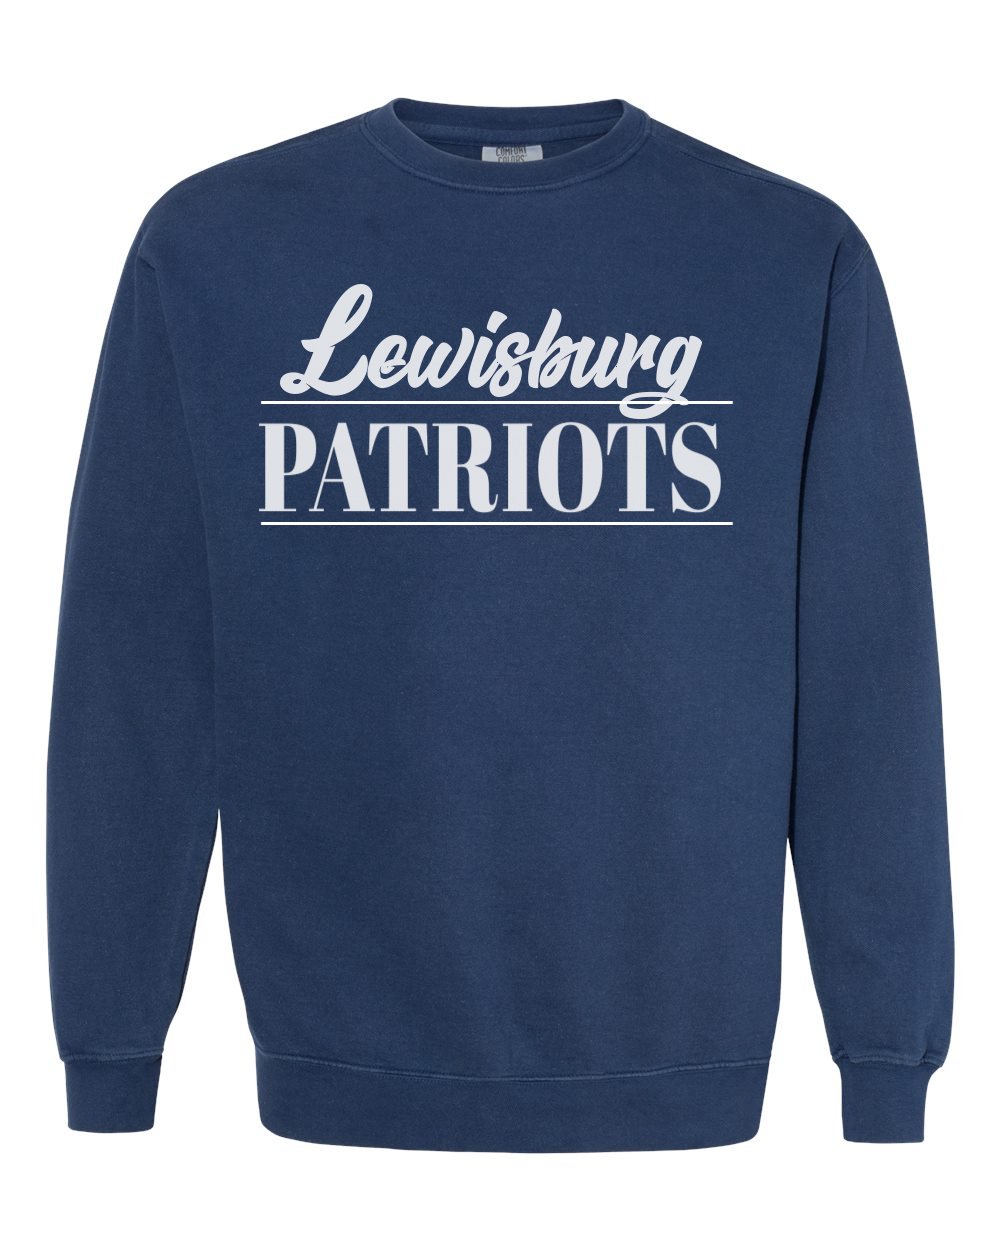 Lewisburg Patriots Comfort Colors Sweatshirts